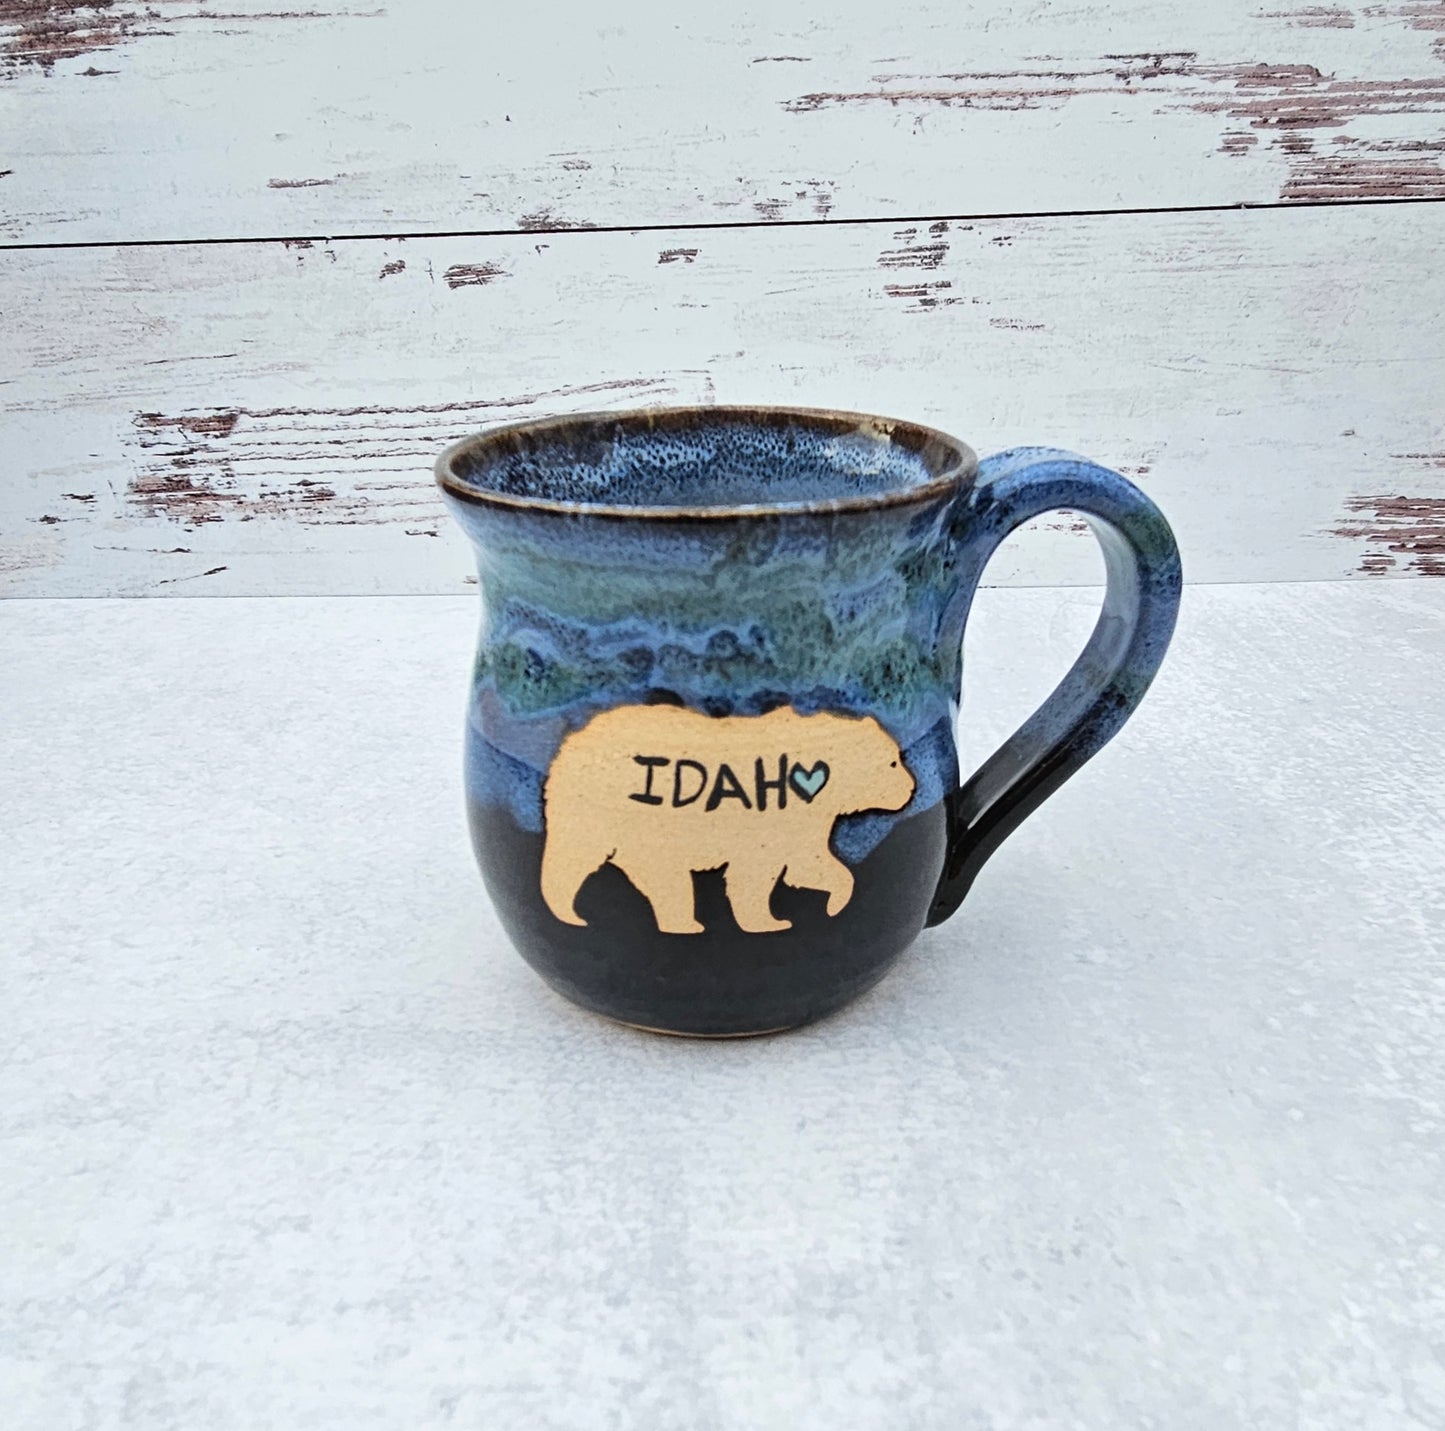 Idaho Bear Mug 》Black and Blue